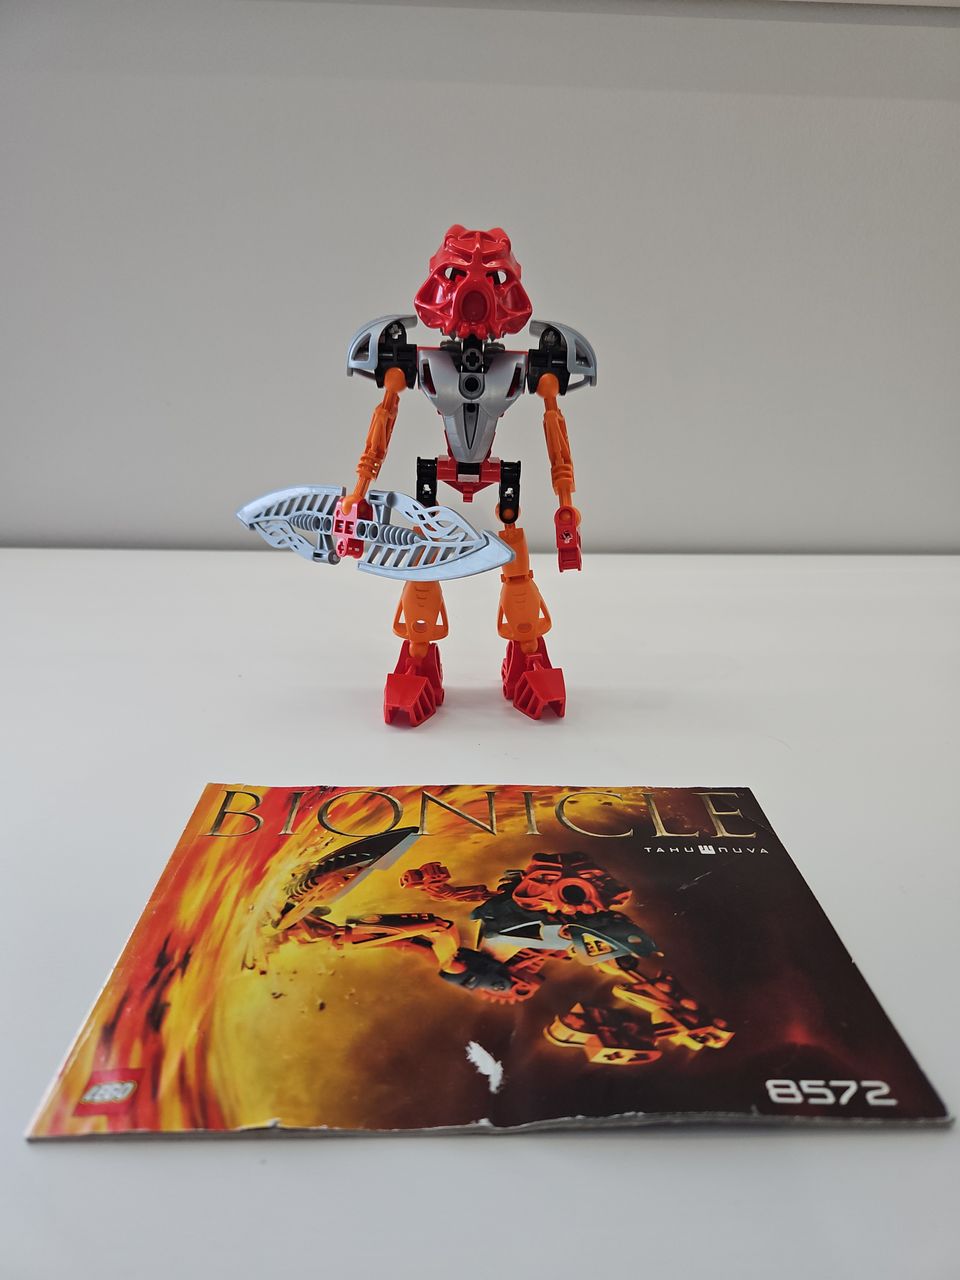 Lego Bionicle 8572: Tahu Nuva